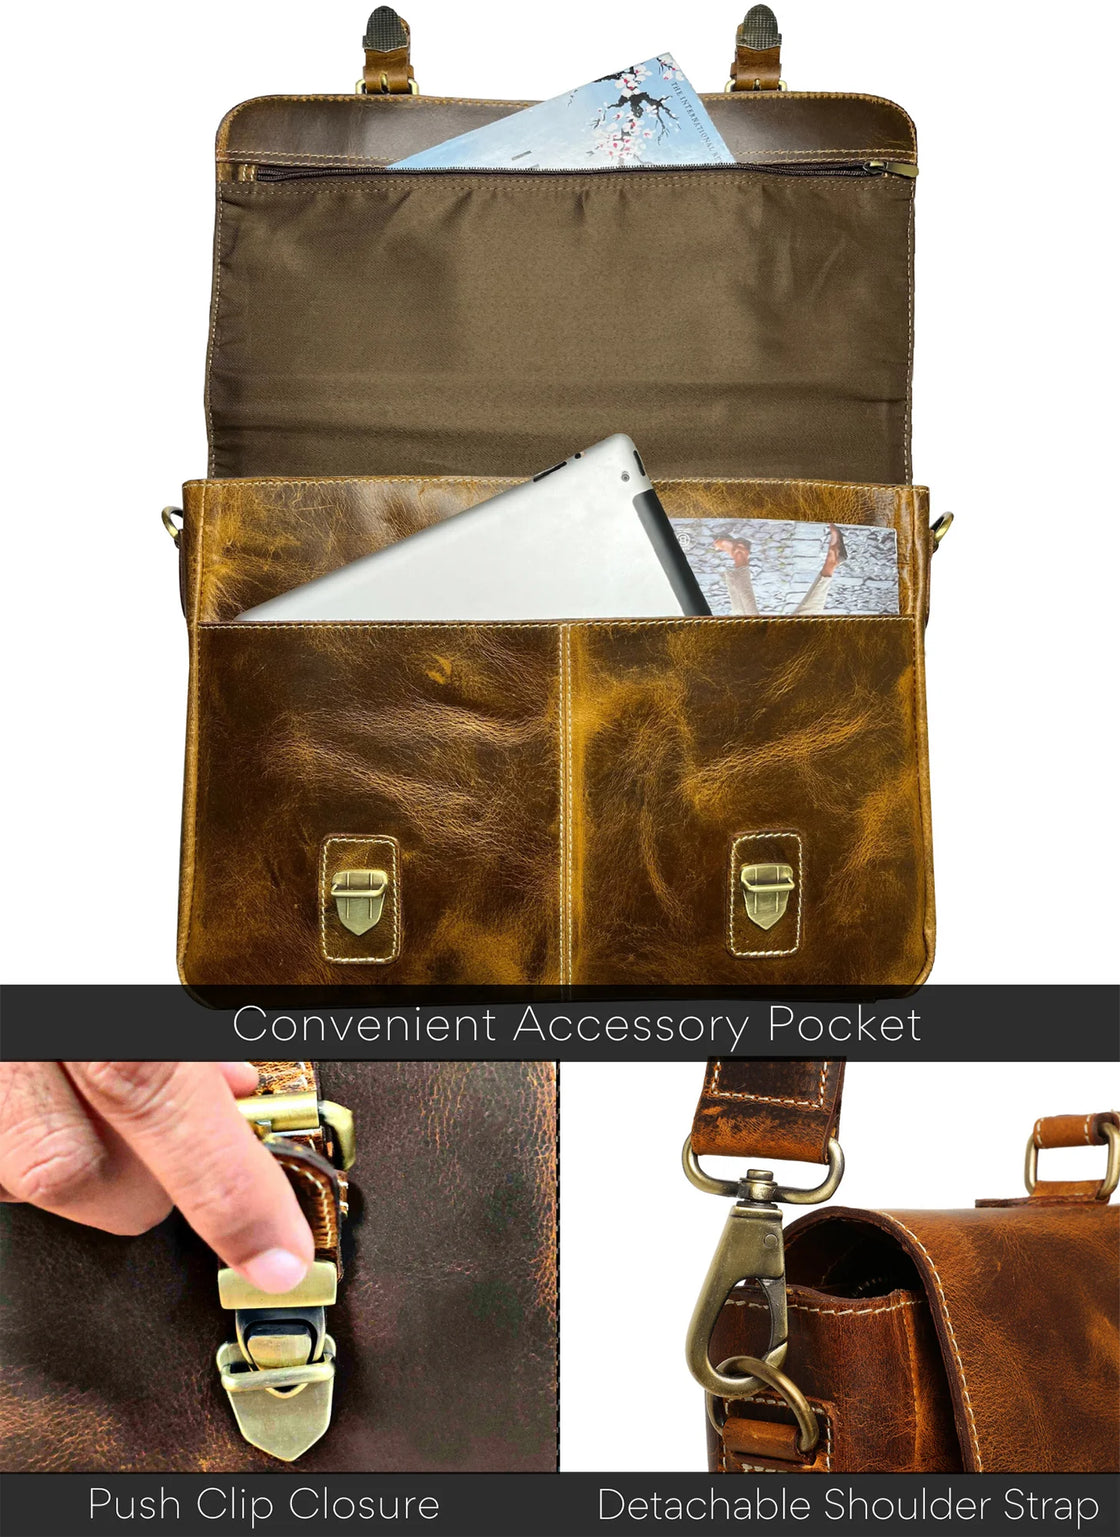 Predator 16" Leather Briefcase Laptop Messenger Bag (Antique Brown)